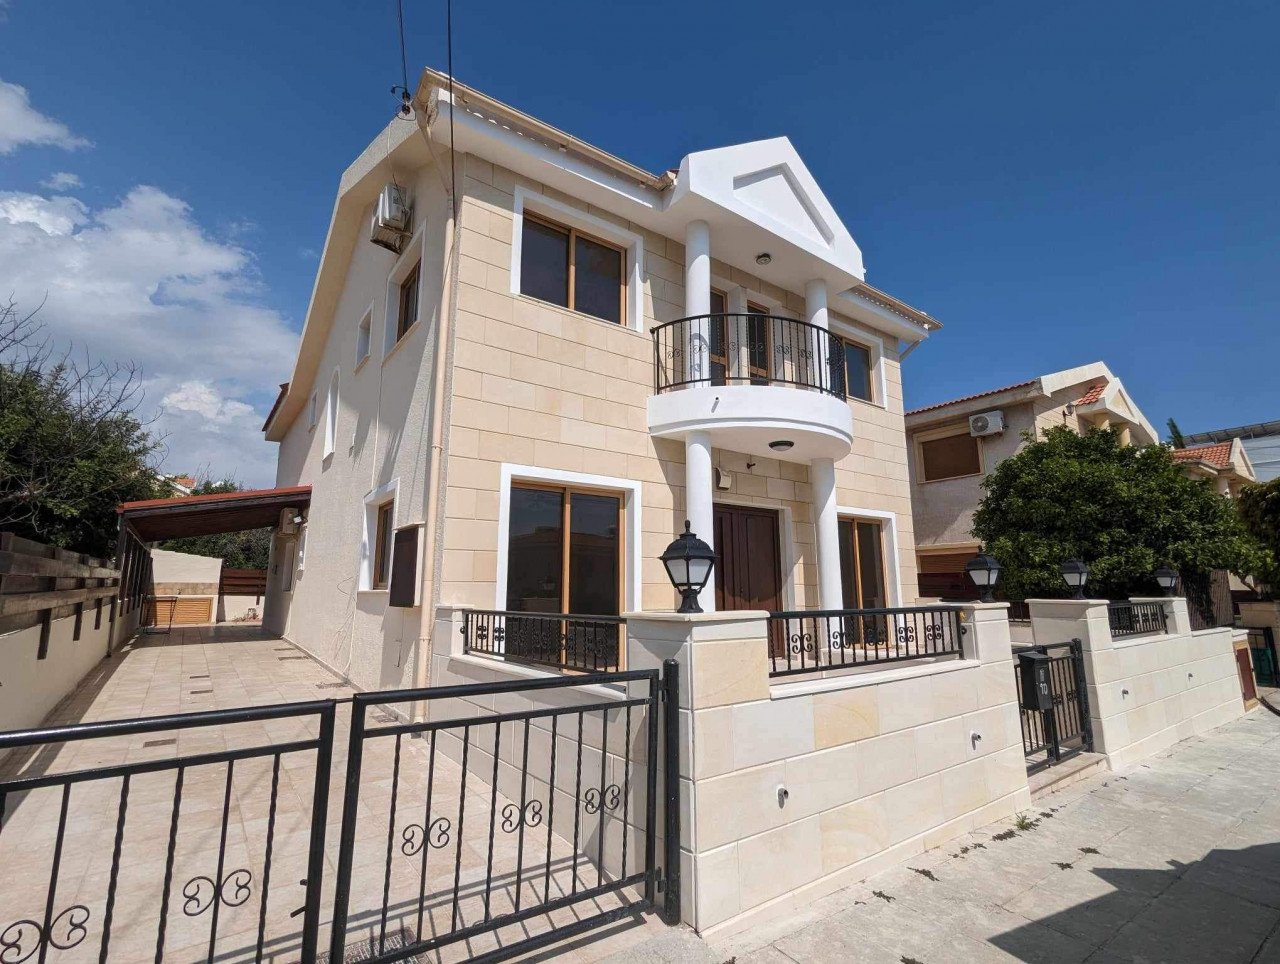 Property for Rent: House (Detached) in Ekali, Limassol for Rent | Key Realtor Cyprus